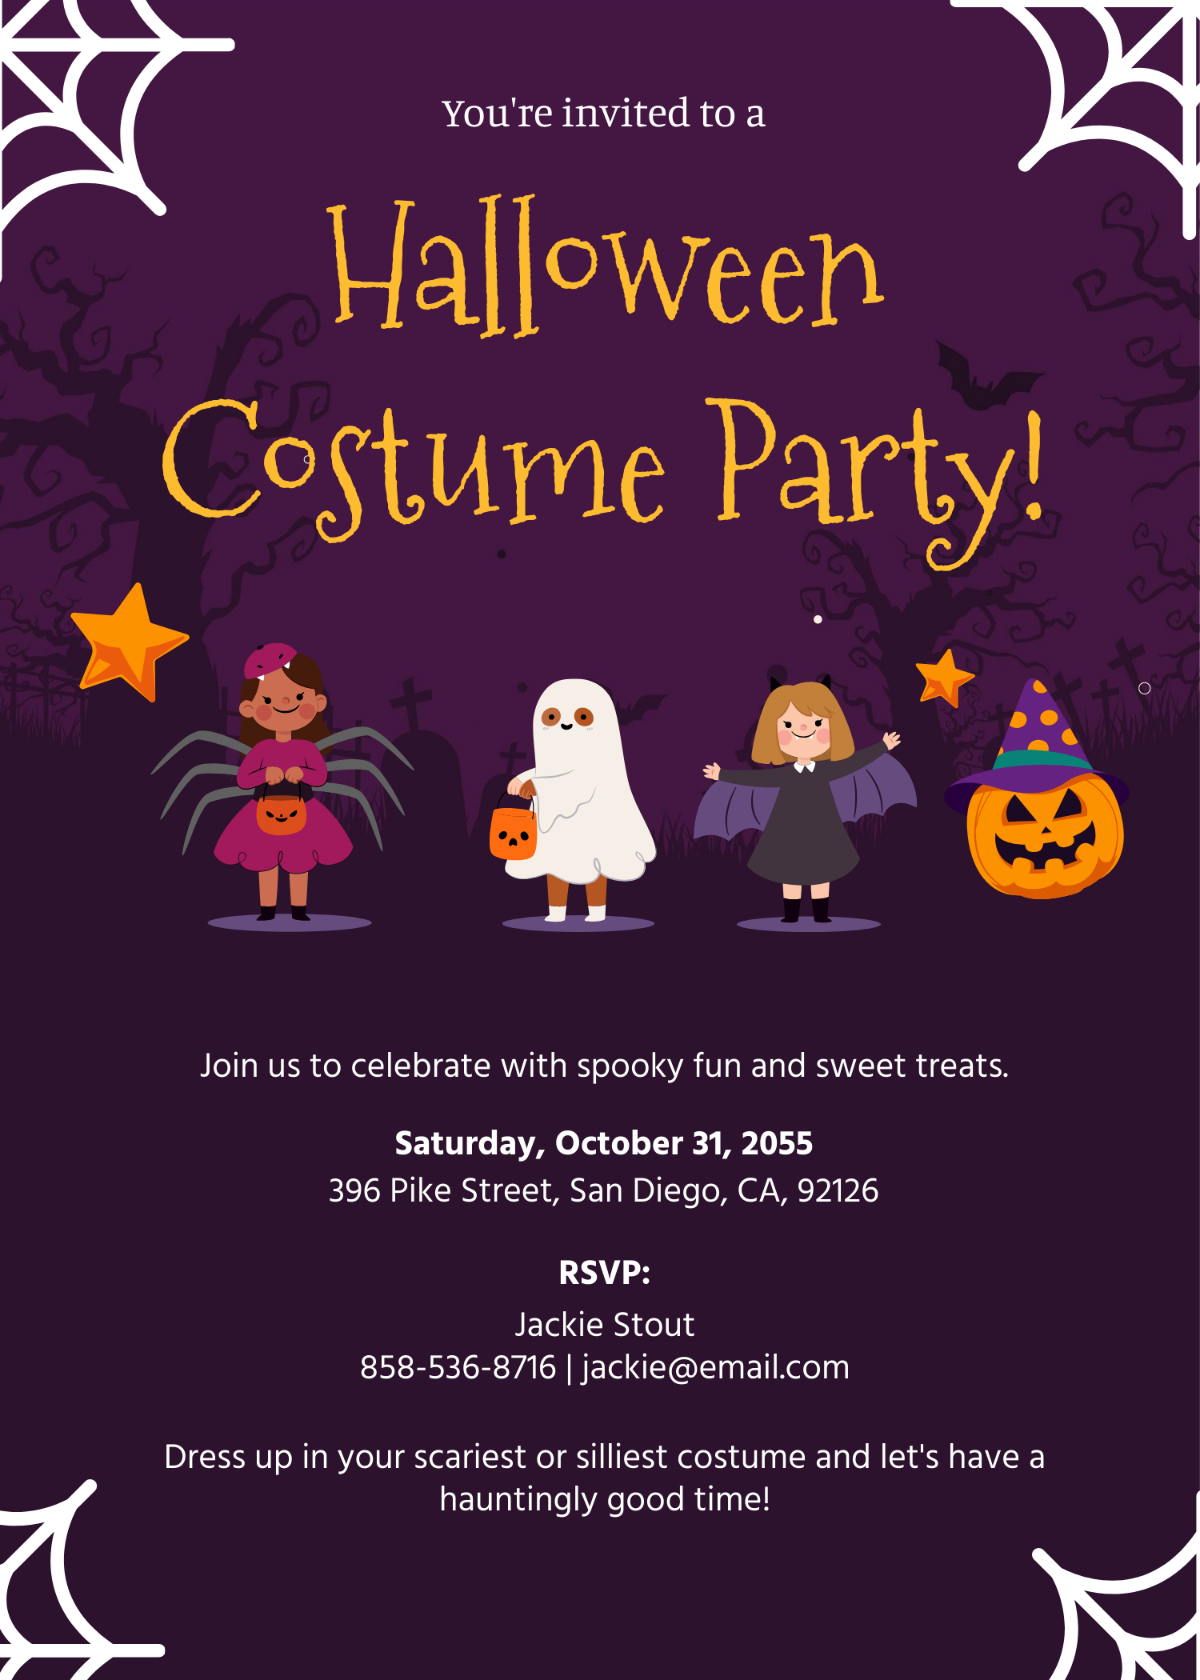 Kids Costume Party Invitation